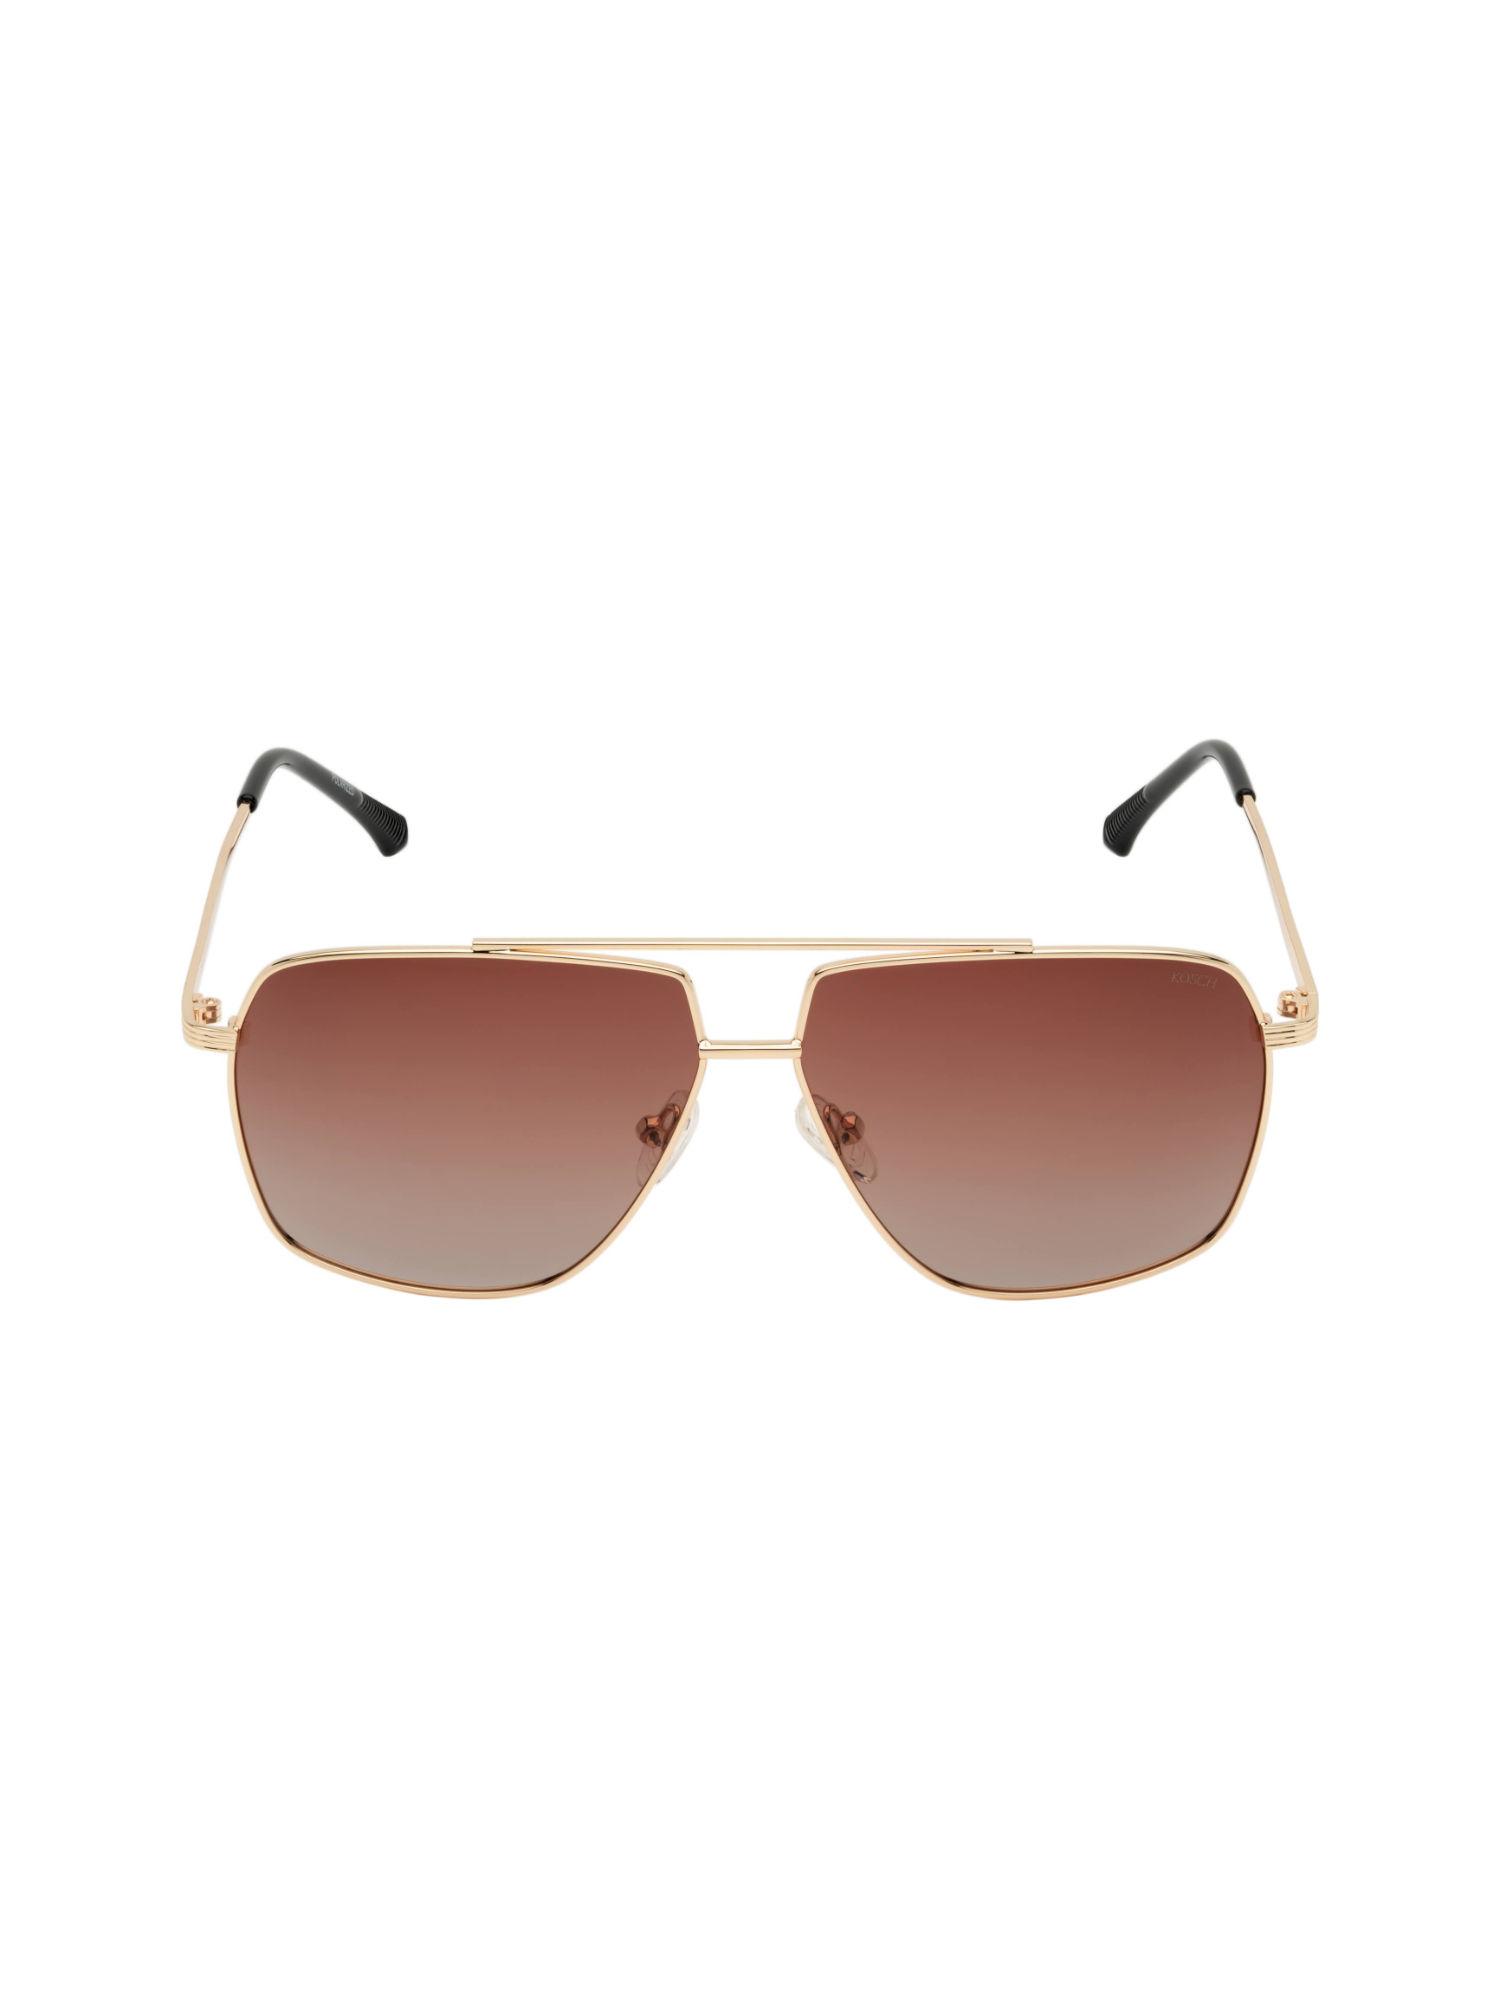 brown - rectangle shape sunglasses - kst 22822